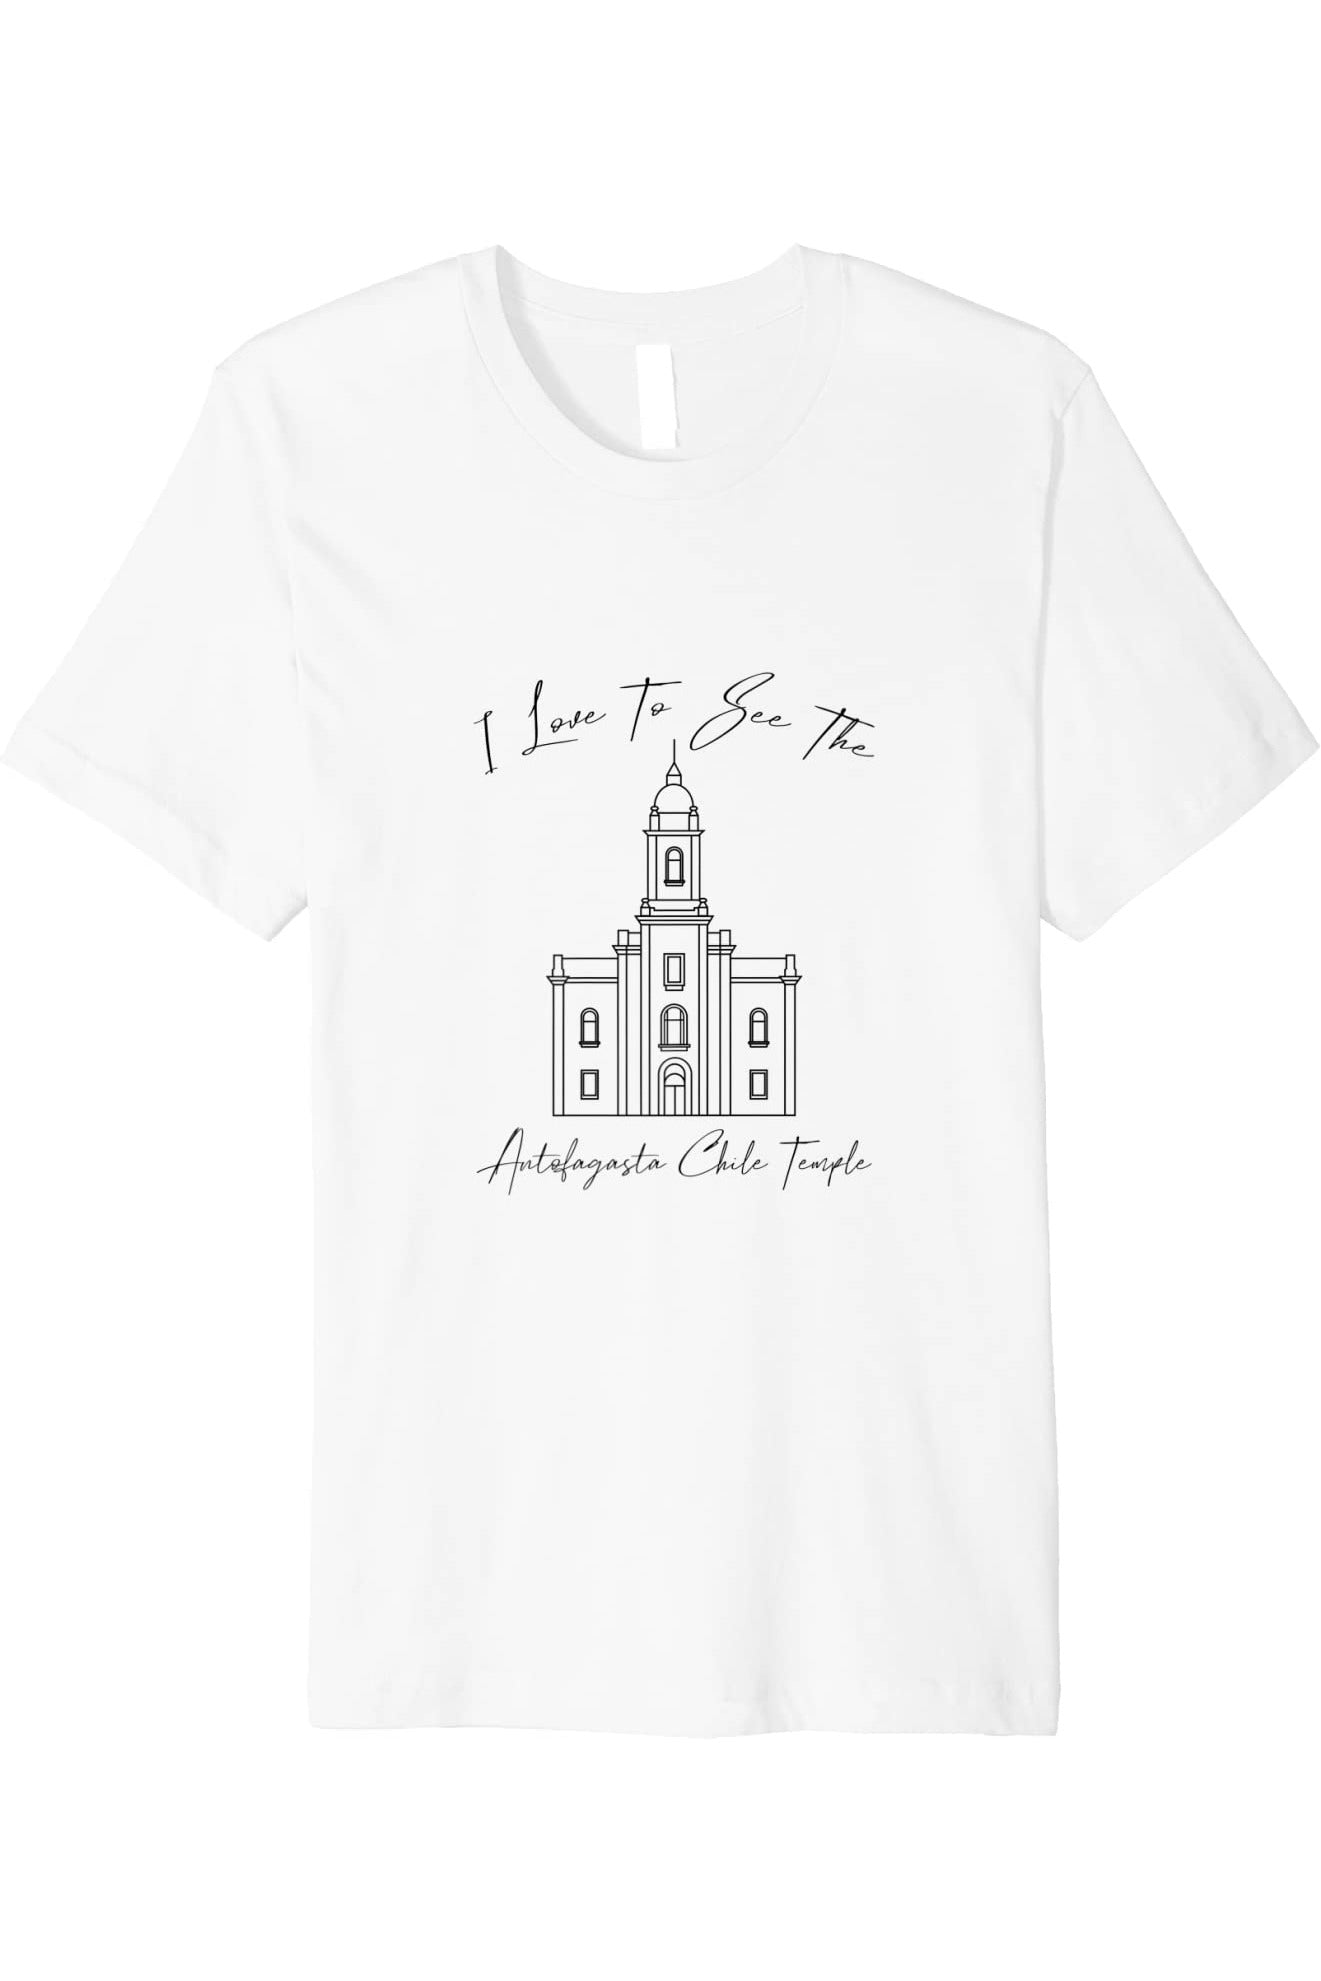 Antofagasta Chile Temple T-Shirt - Premium - Calligraphy Style (English) US